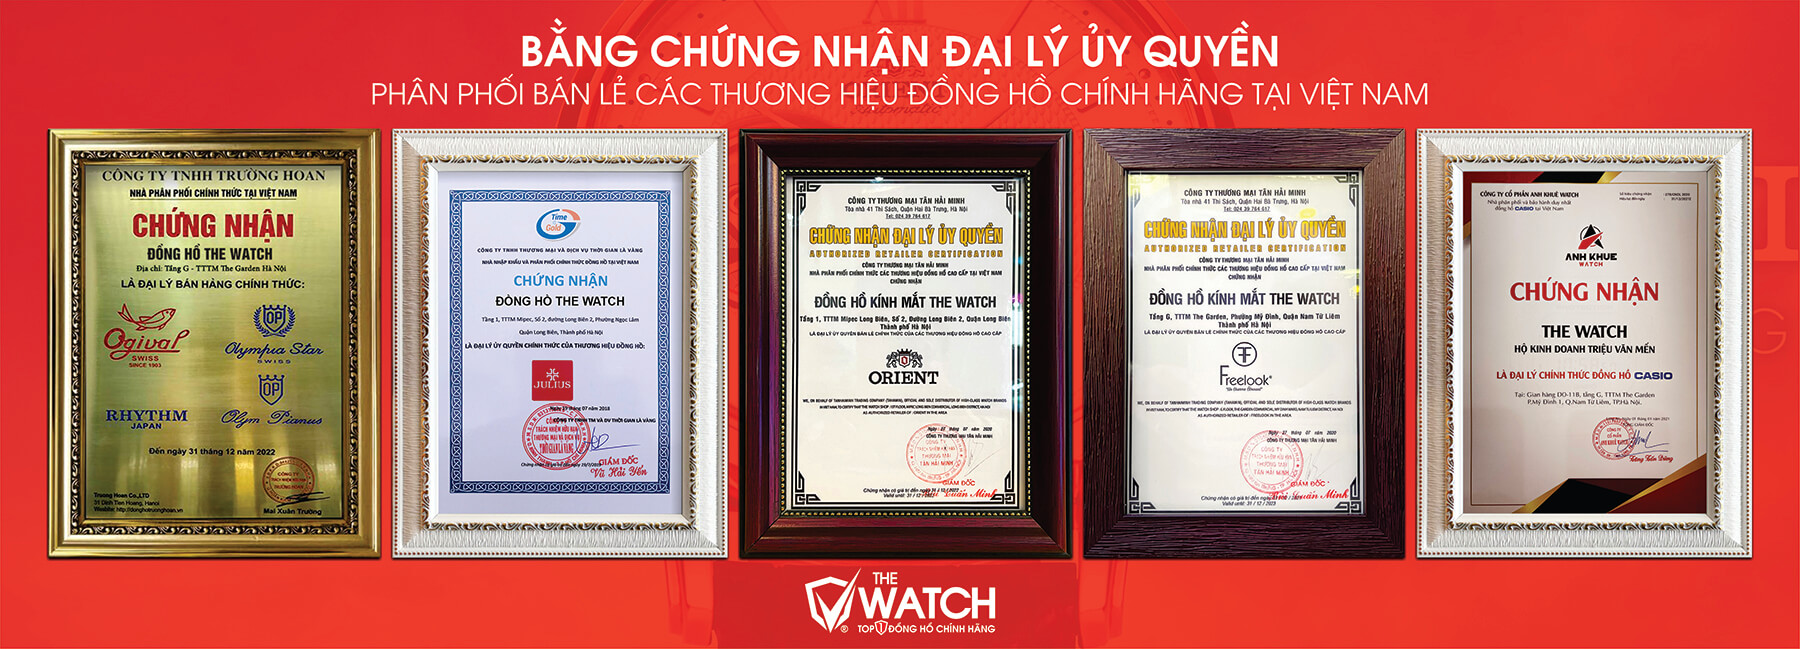 Dong ho chinh hang - the watch